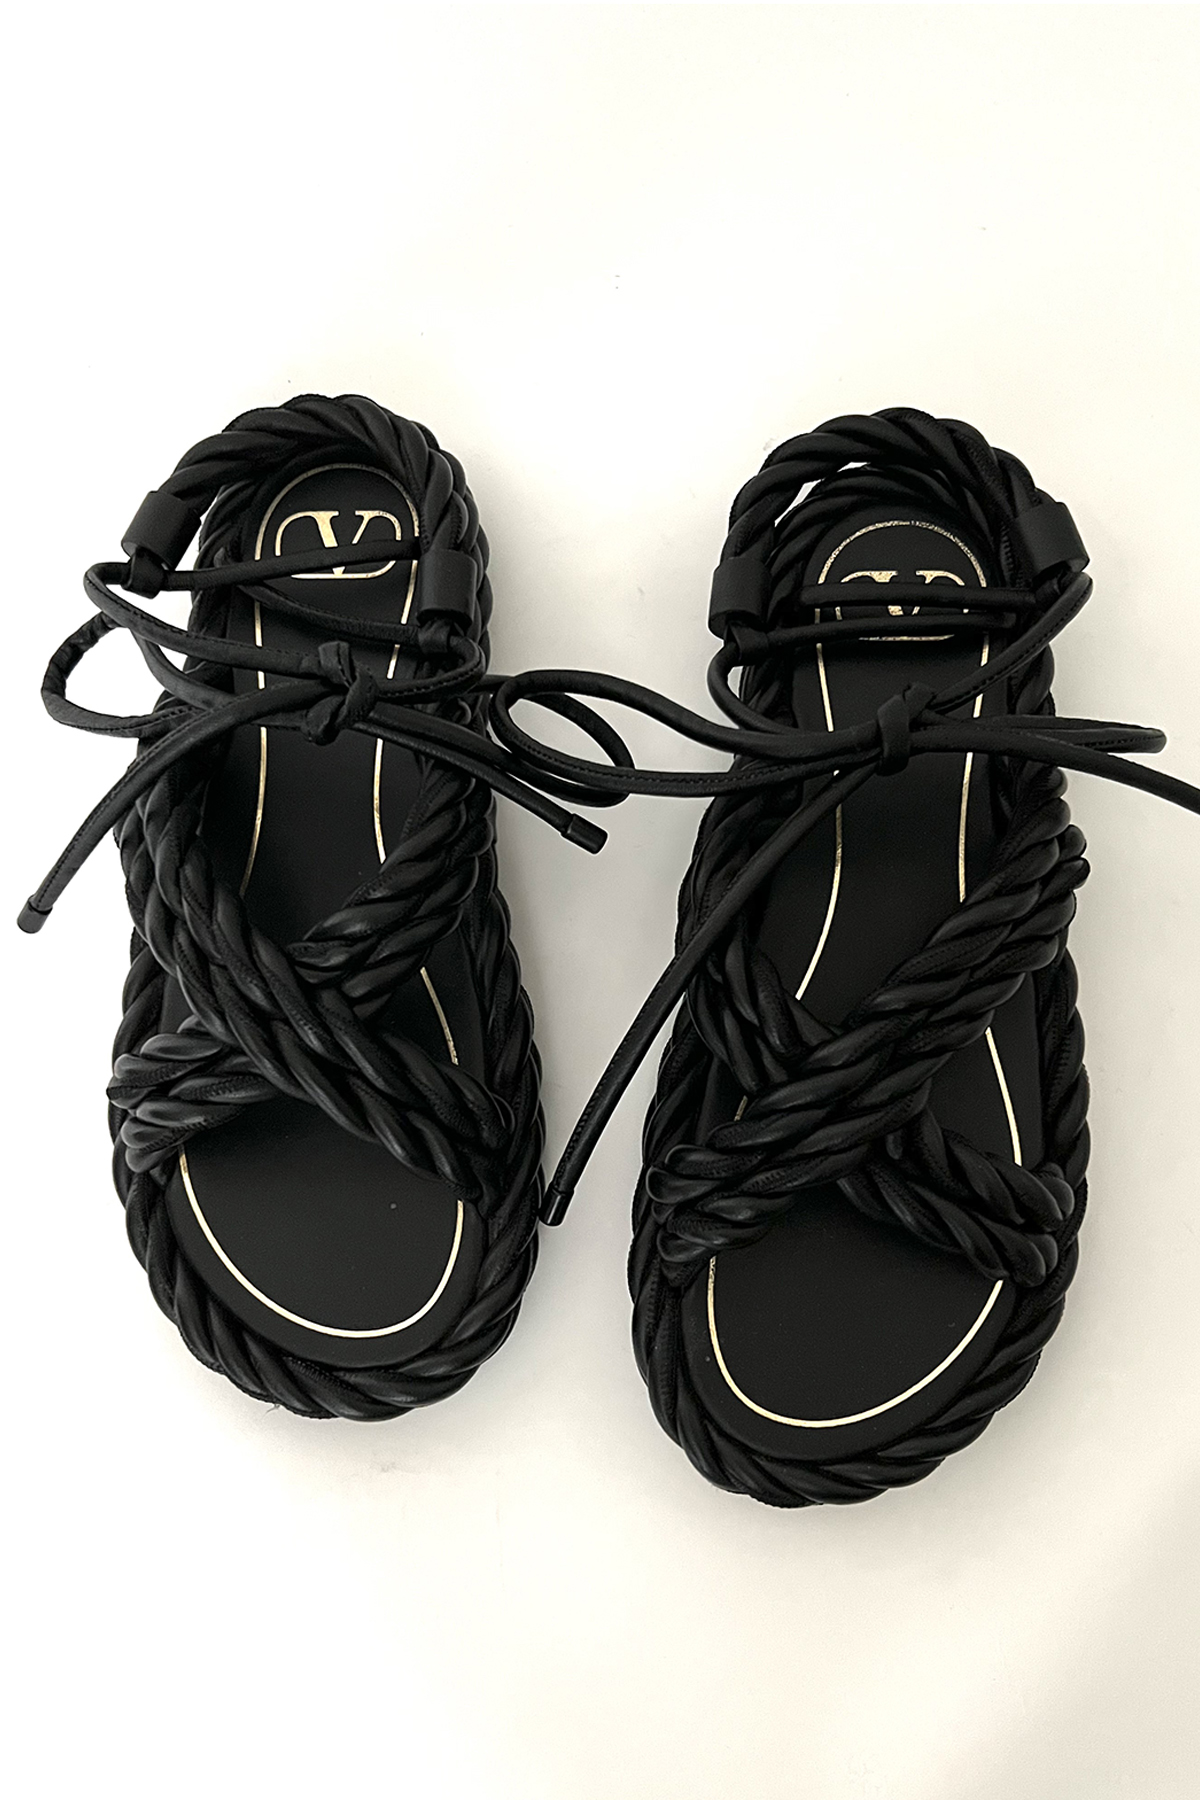 Valentino Black Sandals - Size 38